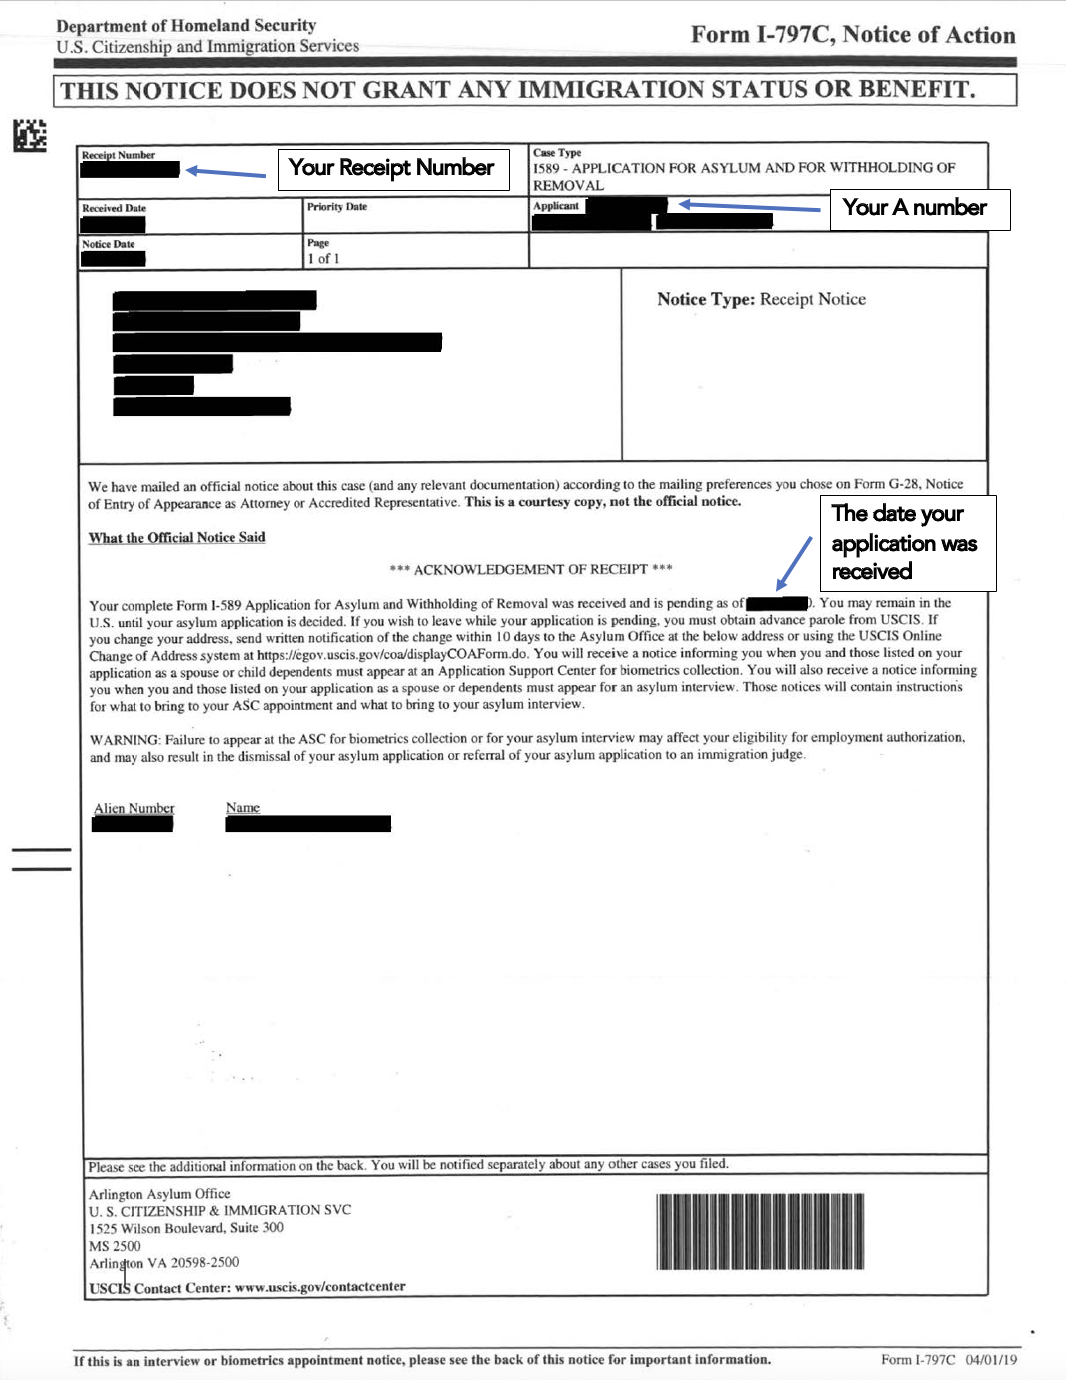 USCIS Asylum Application Receipt Notice Resources for Asylum Seekers